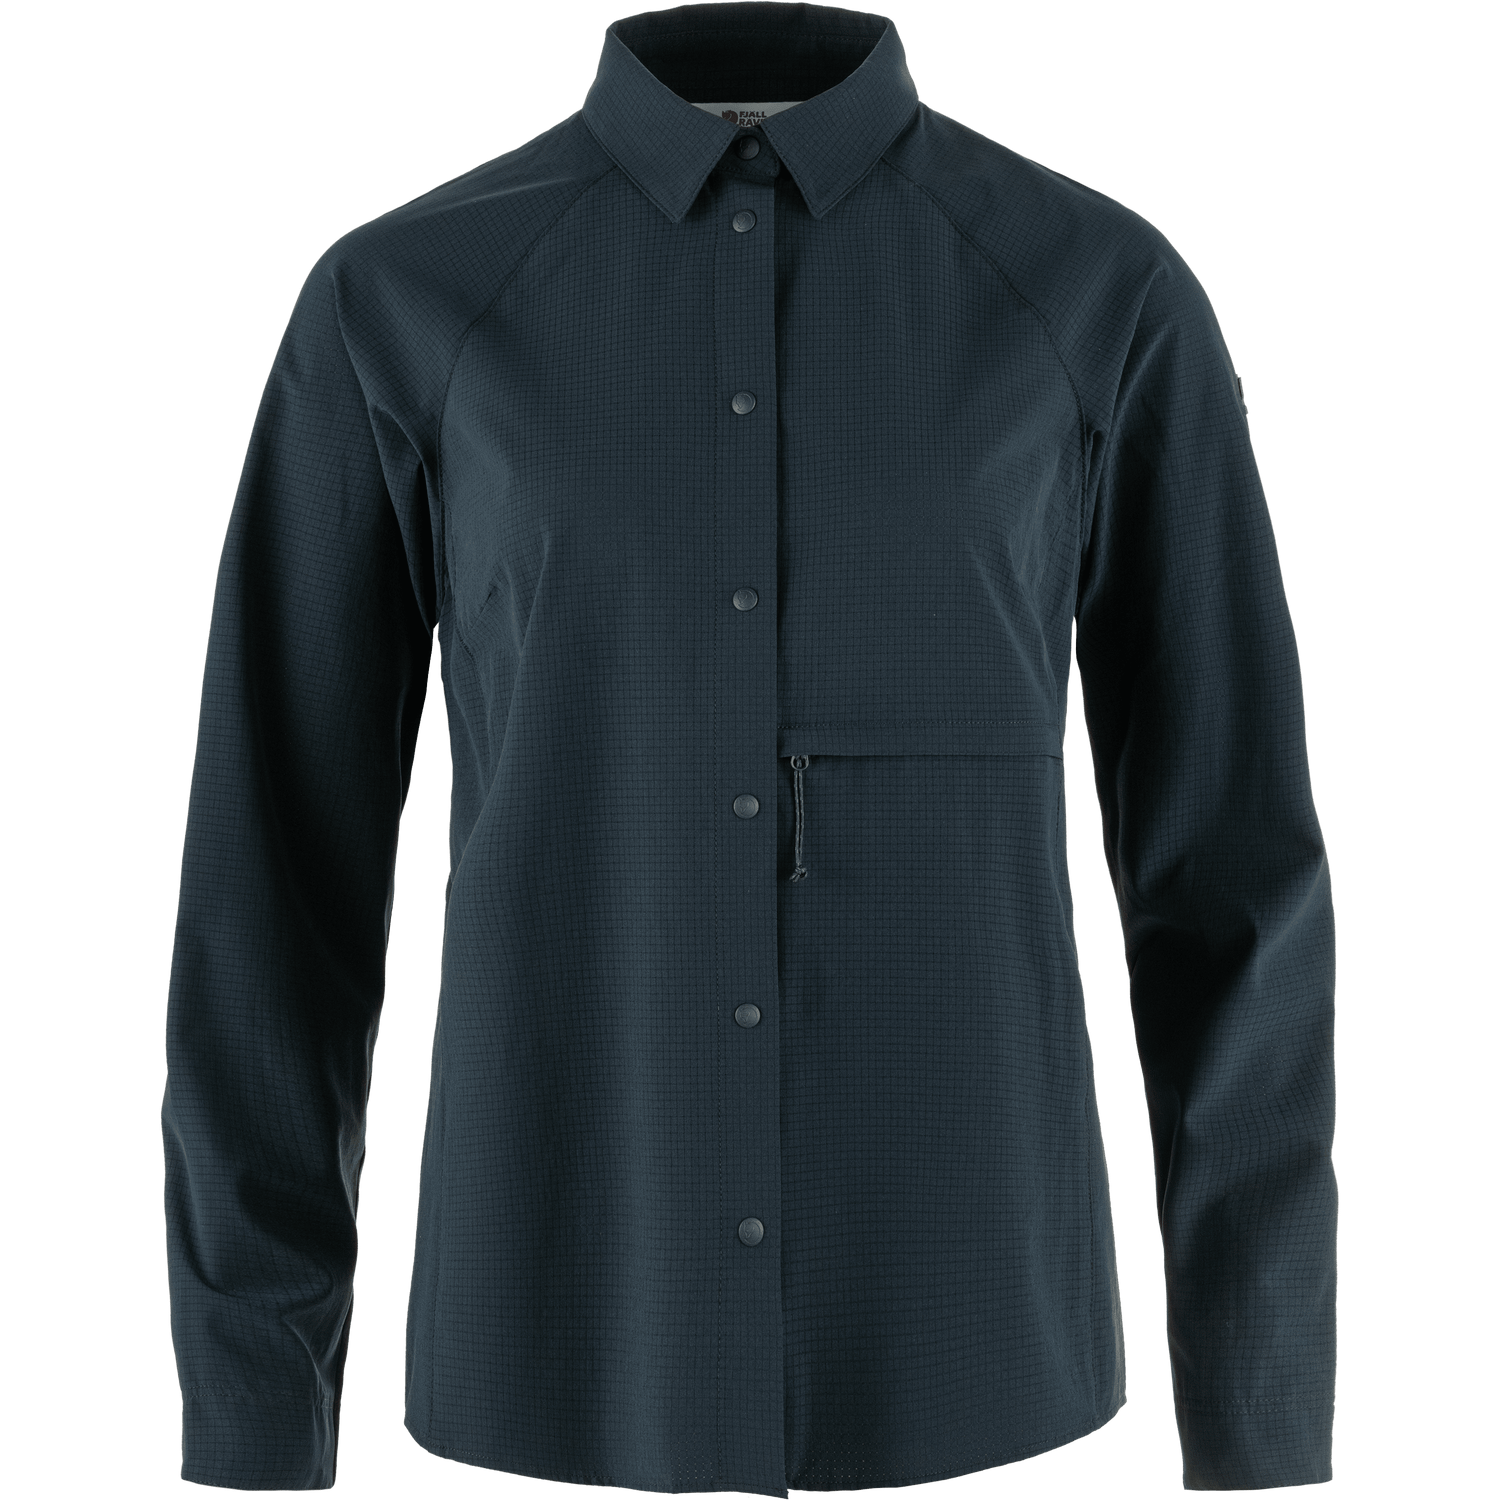 Fjällräven - W's Abisko Trekking Shirt - Recycled polyester - Weekendbee - sustainable sportswear